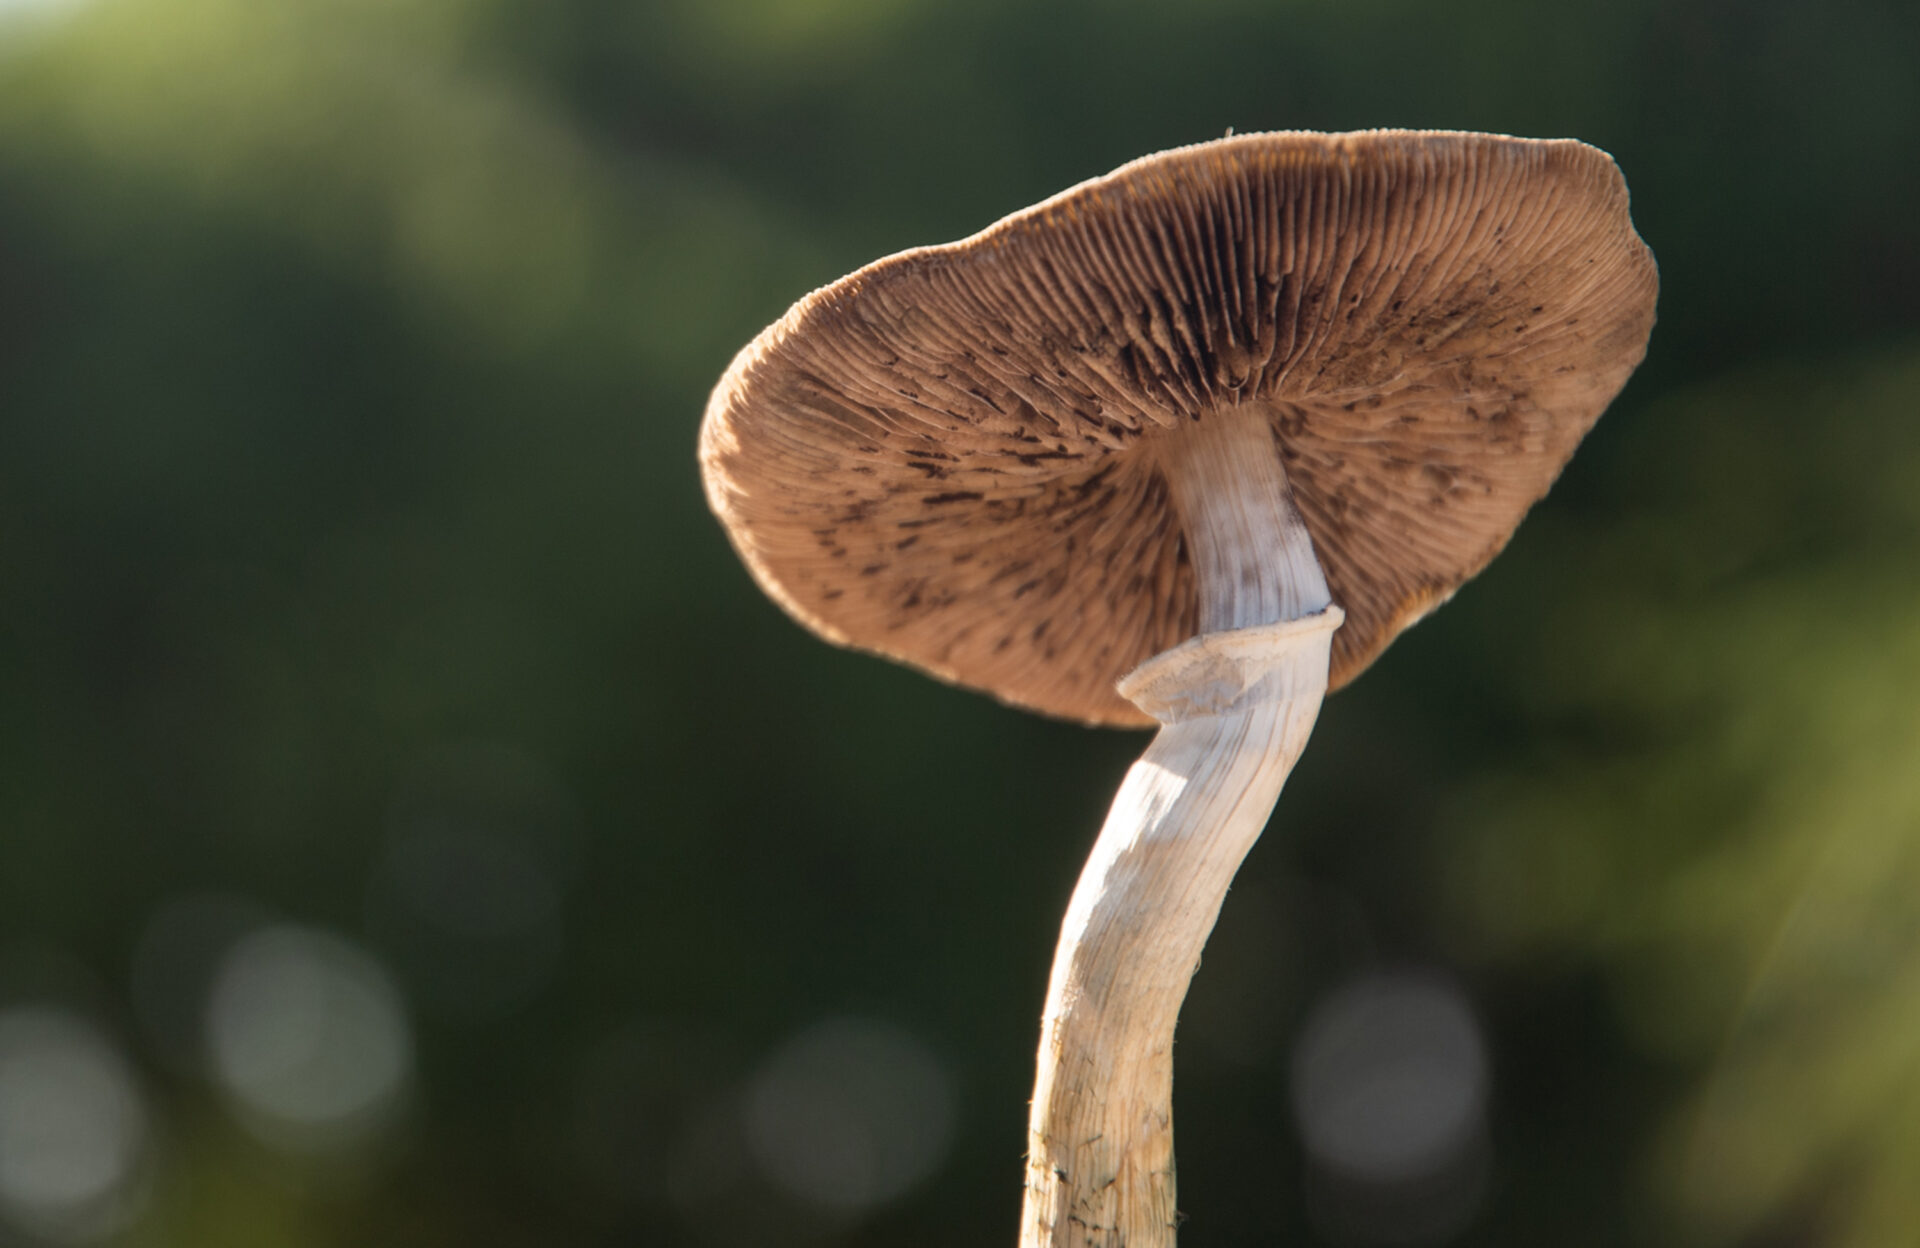 a psilocybin mushroom